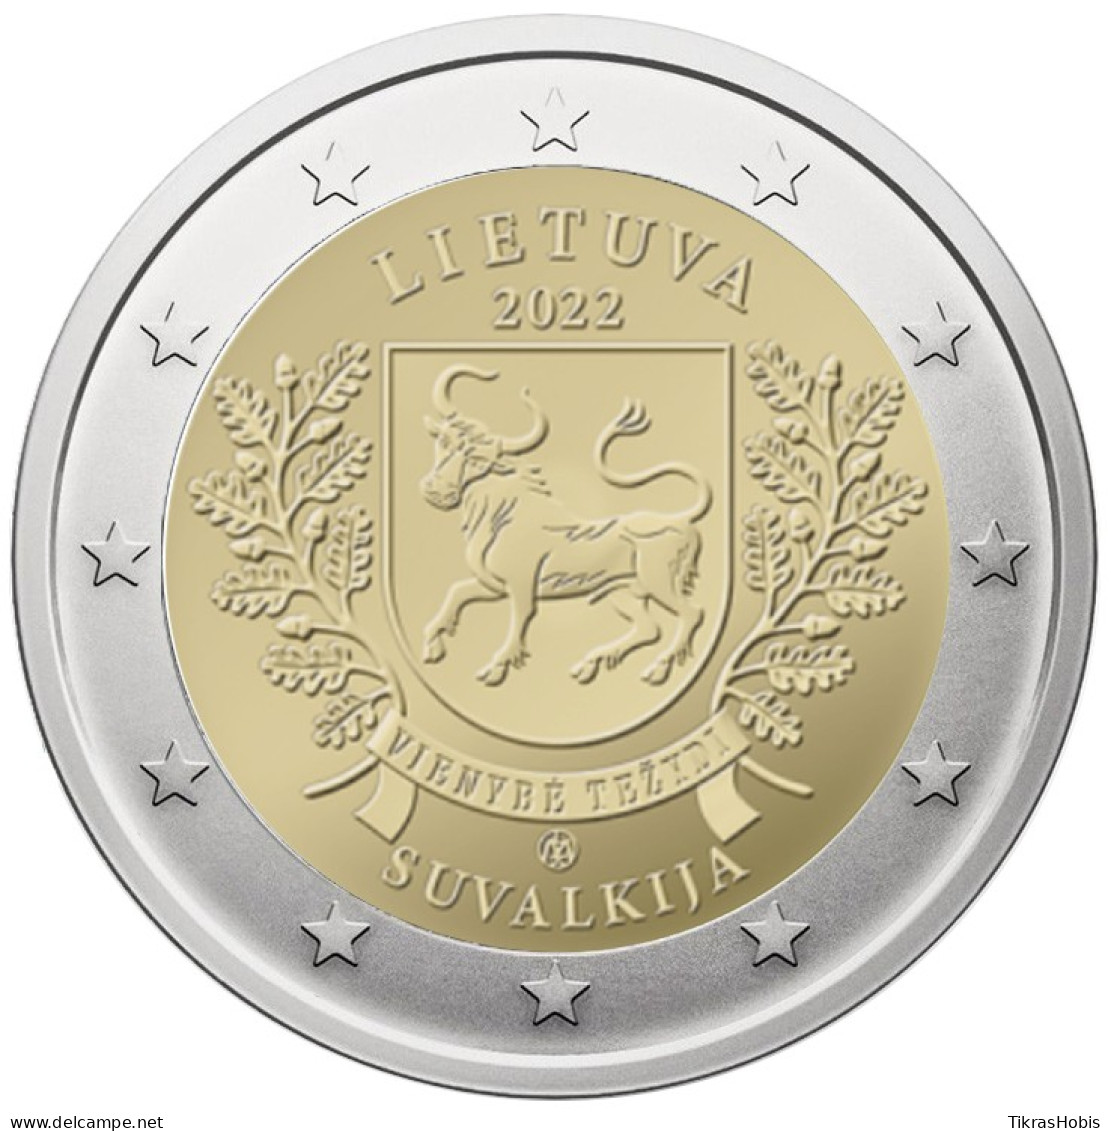 Lithuania 2 Euro, 2022 Suvalkija - Lithuania